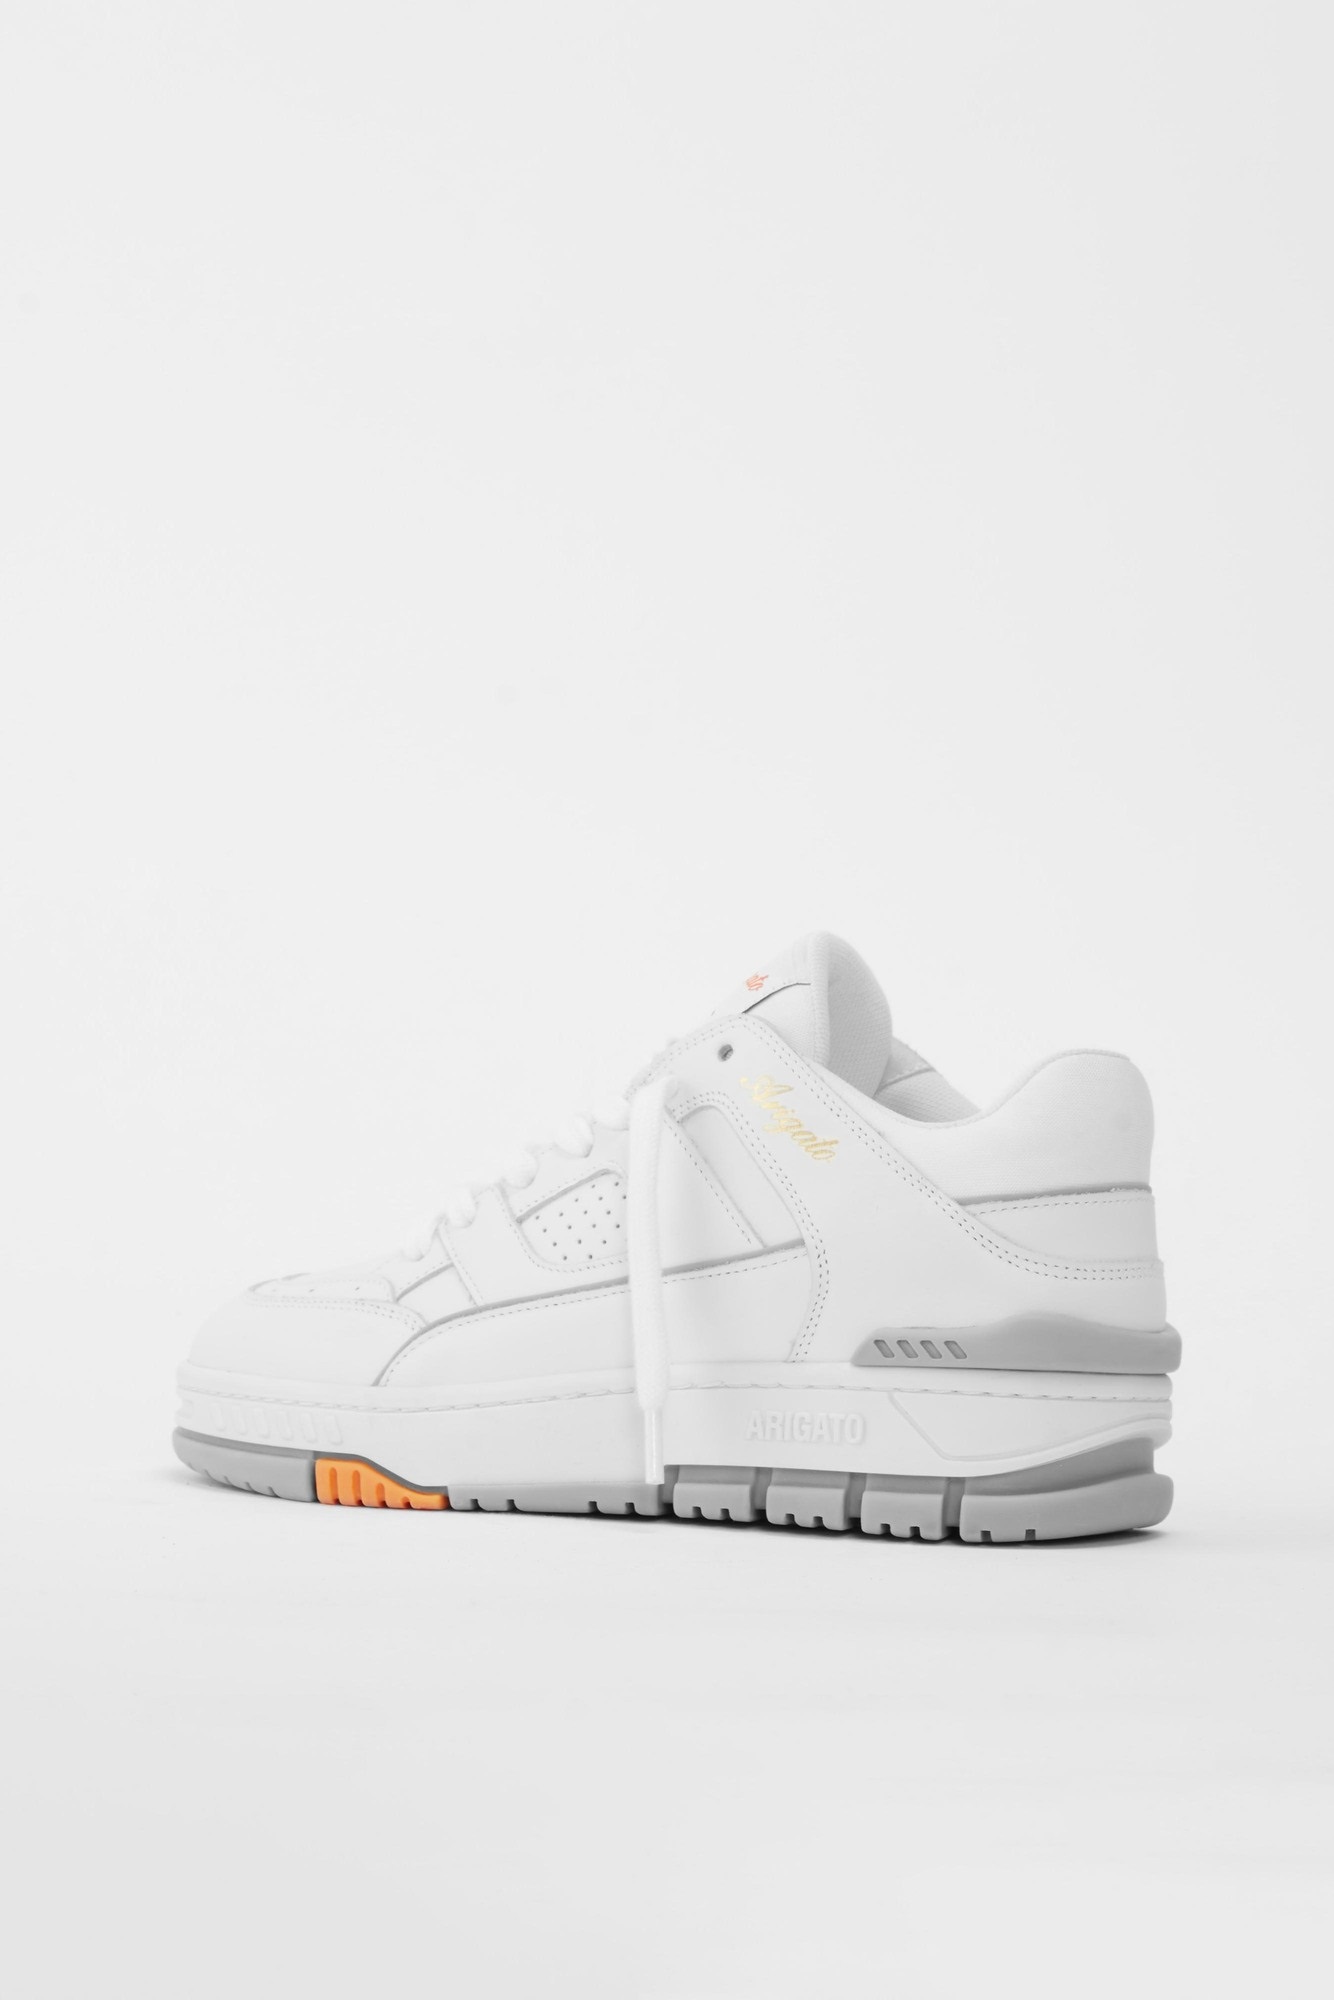 AXEL ARIGATO Area Sneaker in White/Grey 40